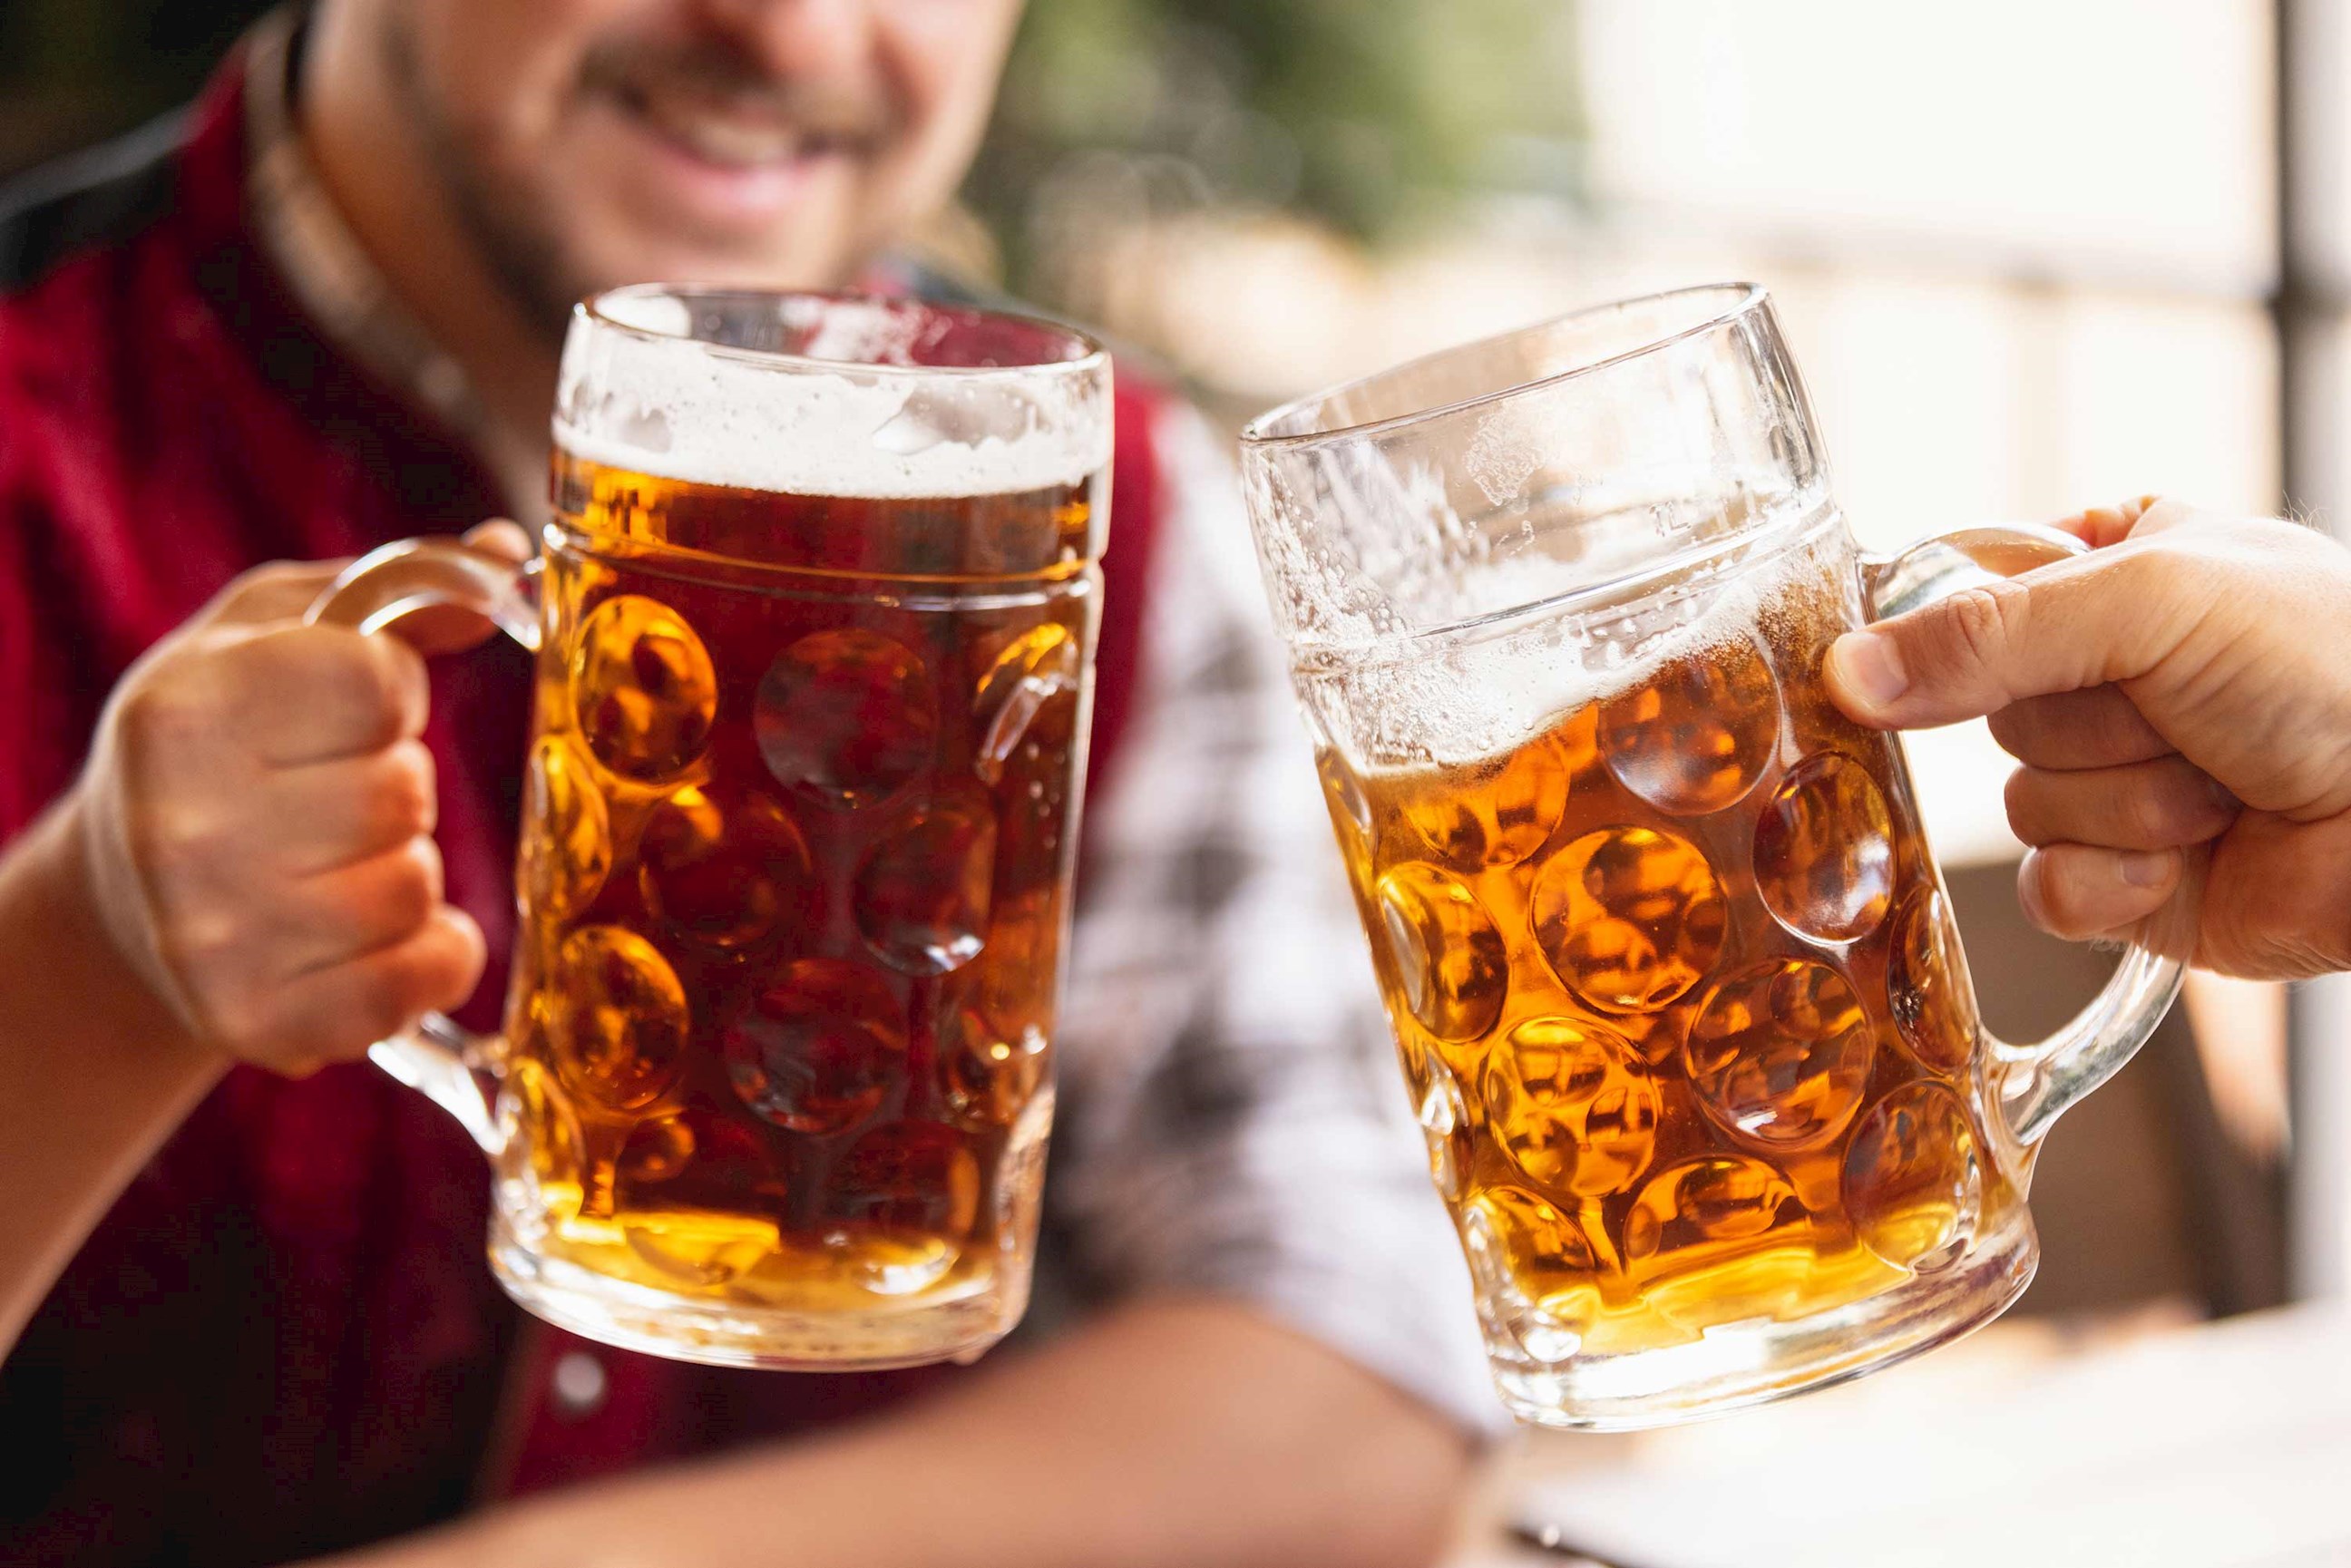 Enjoy a Bavarian dinner and beer